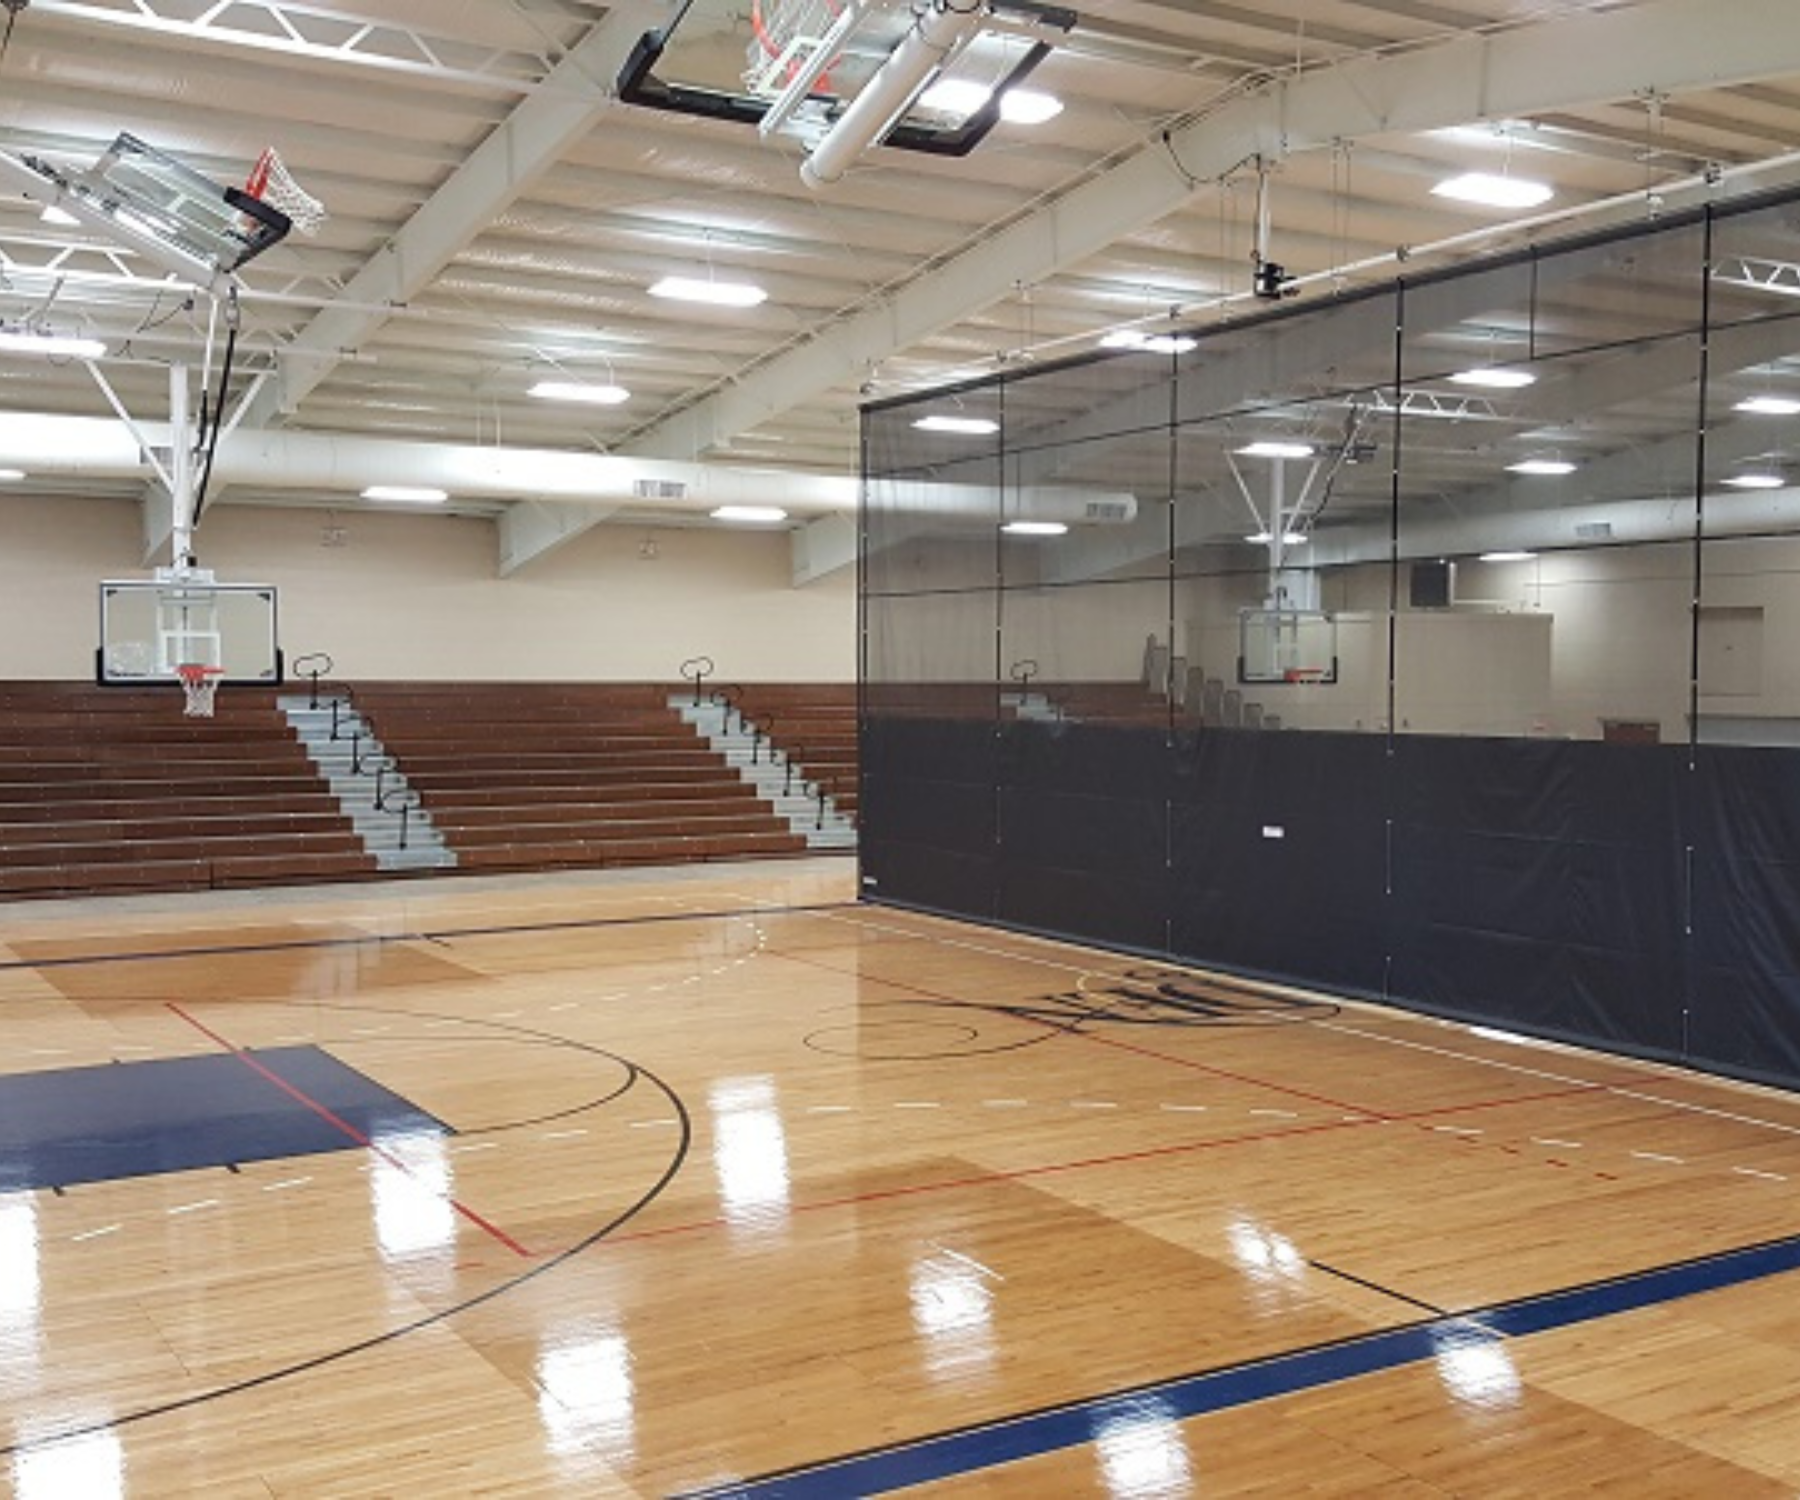 Custom dark blue gymnasium curtain netting dividing the court 